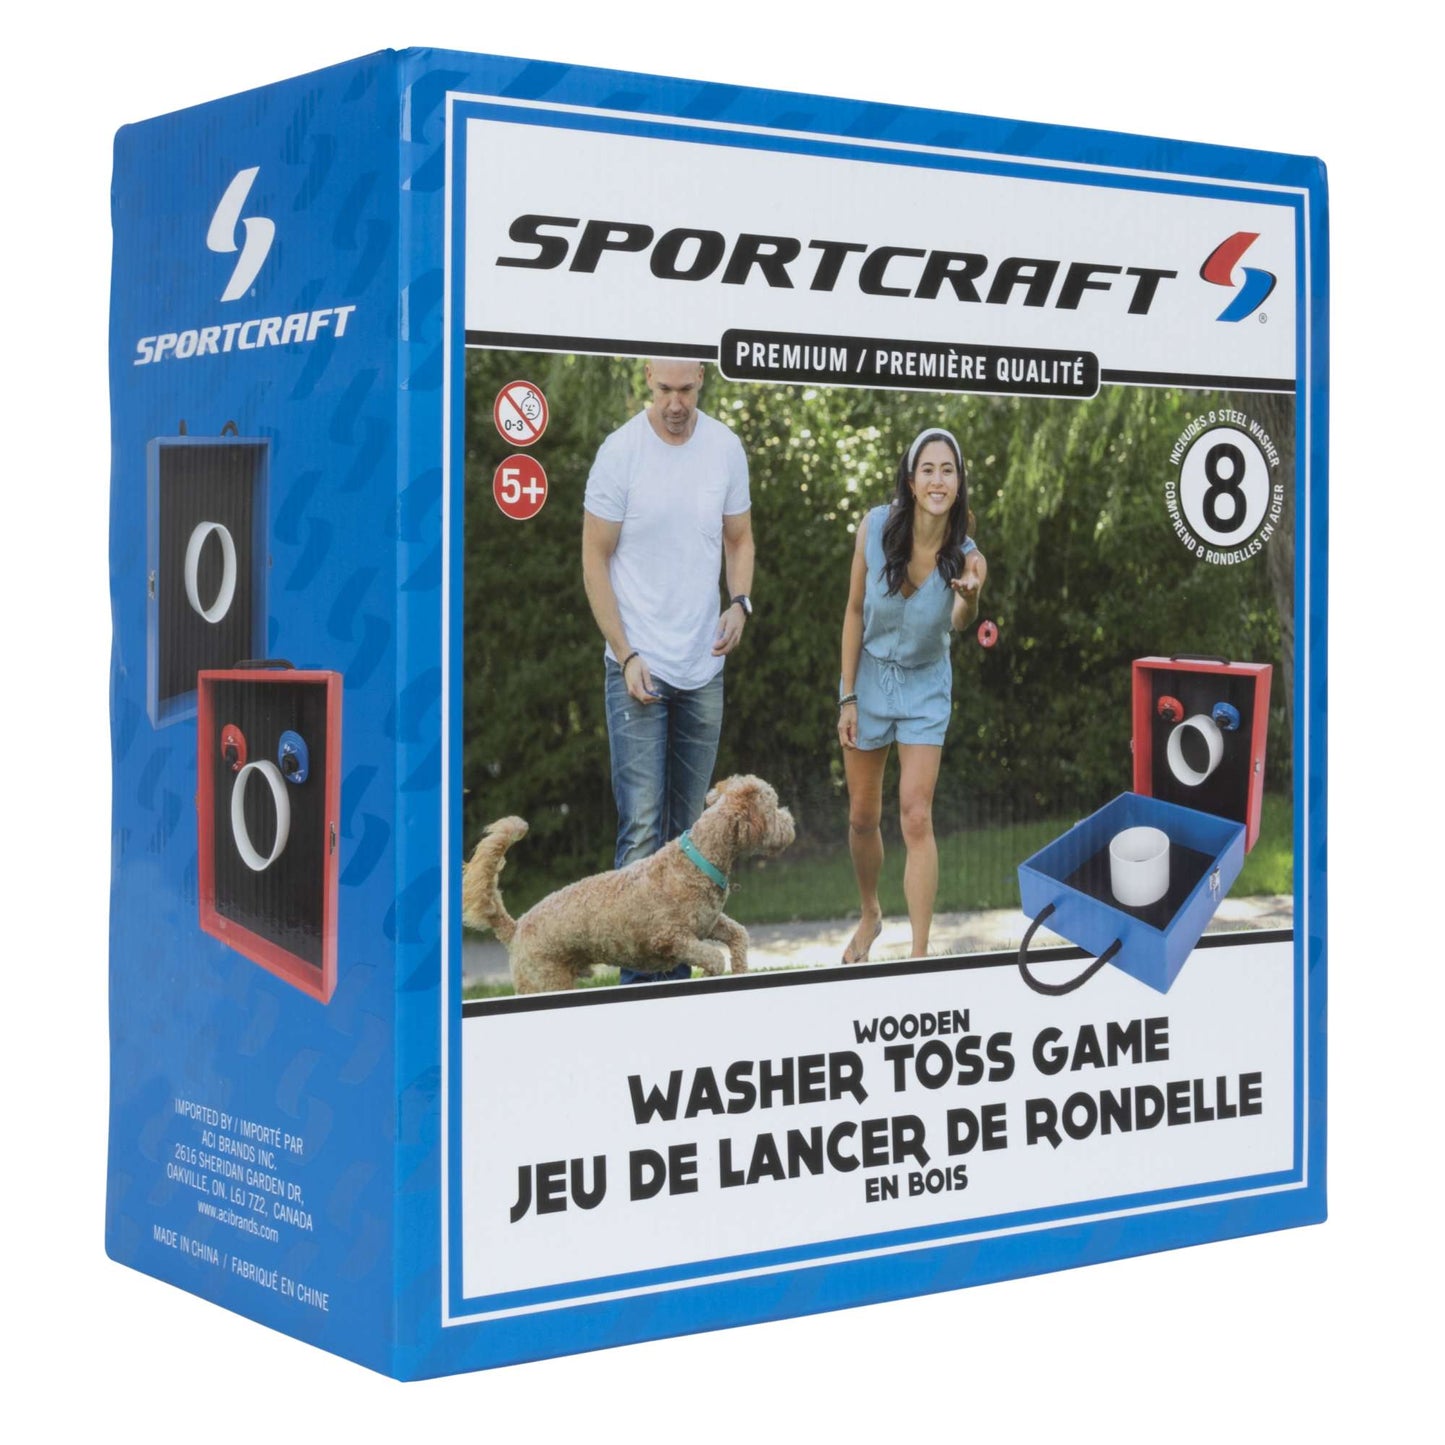 Sportcraft Wooden Washer Toss Game packaging